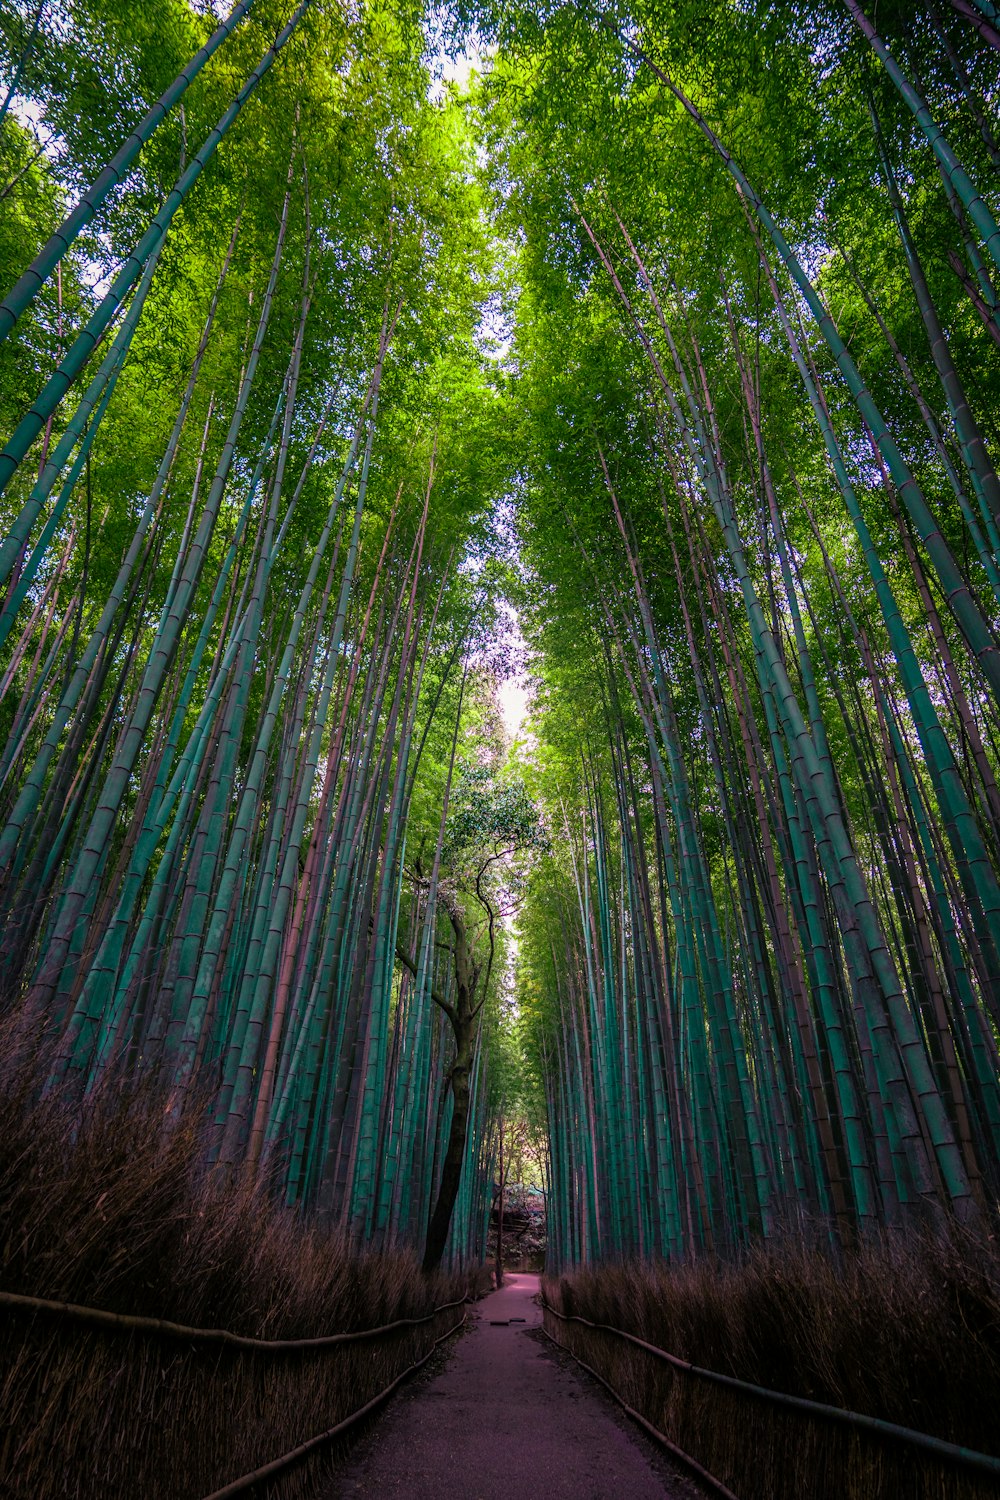 a path through a grove of tall bamboo trees